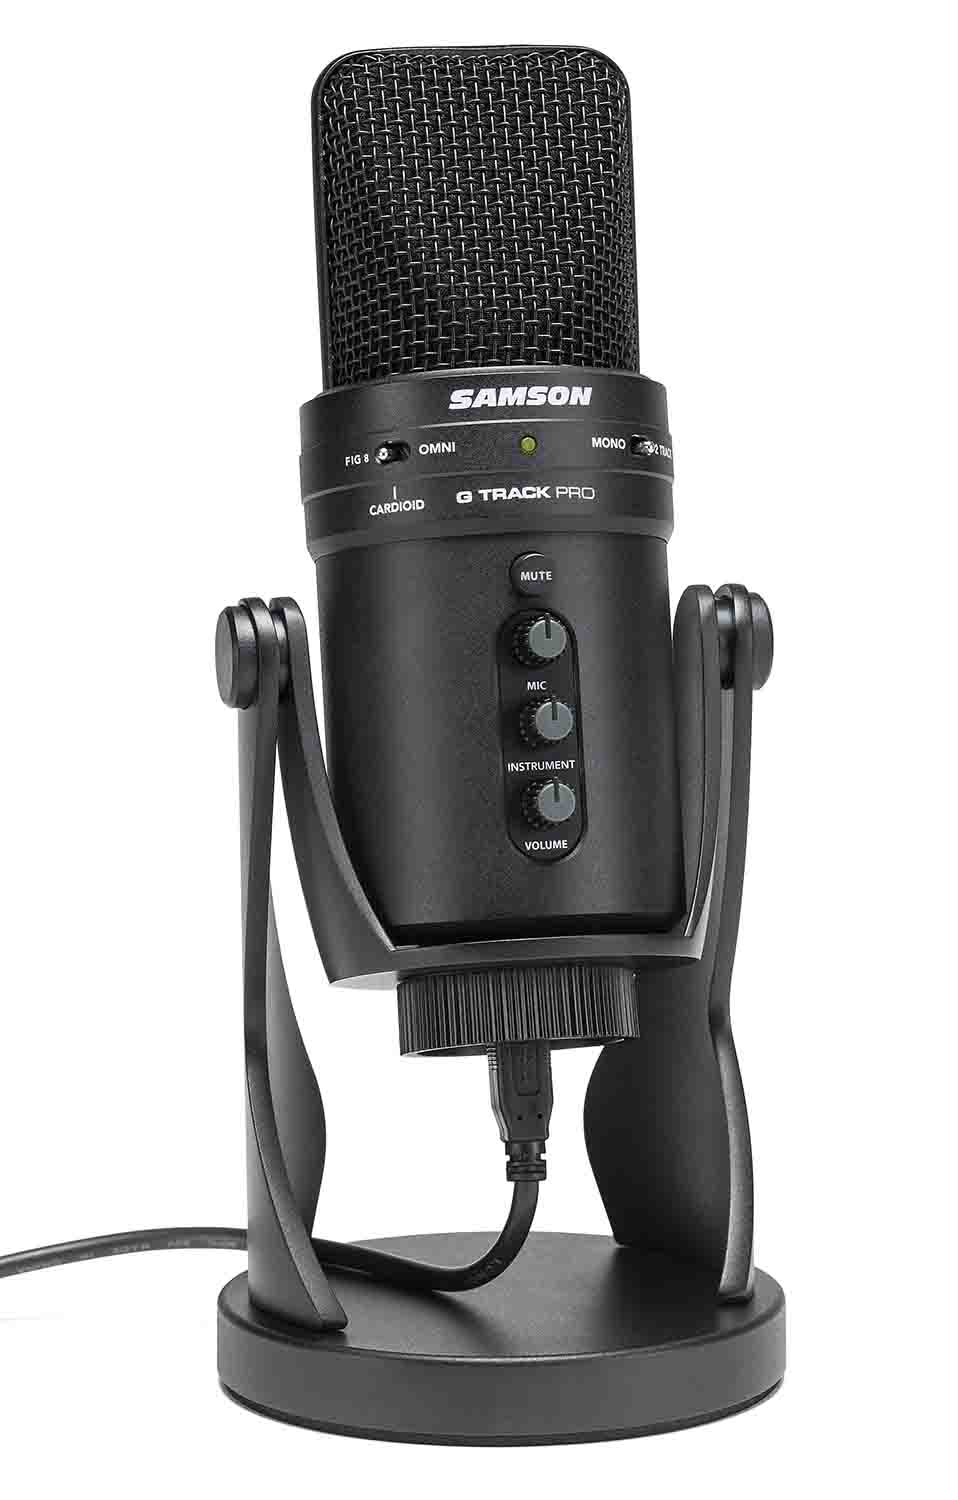 Samson G Track Pro Professional USB Microphone with Audio Interface - Hollywood DJ